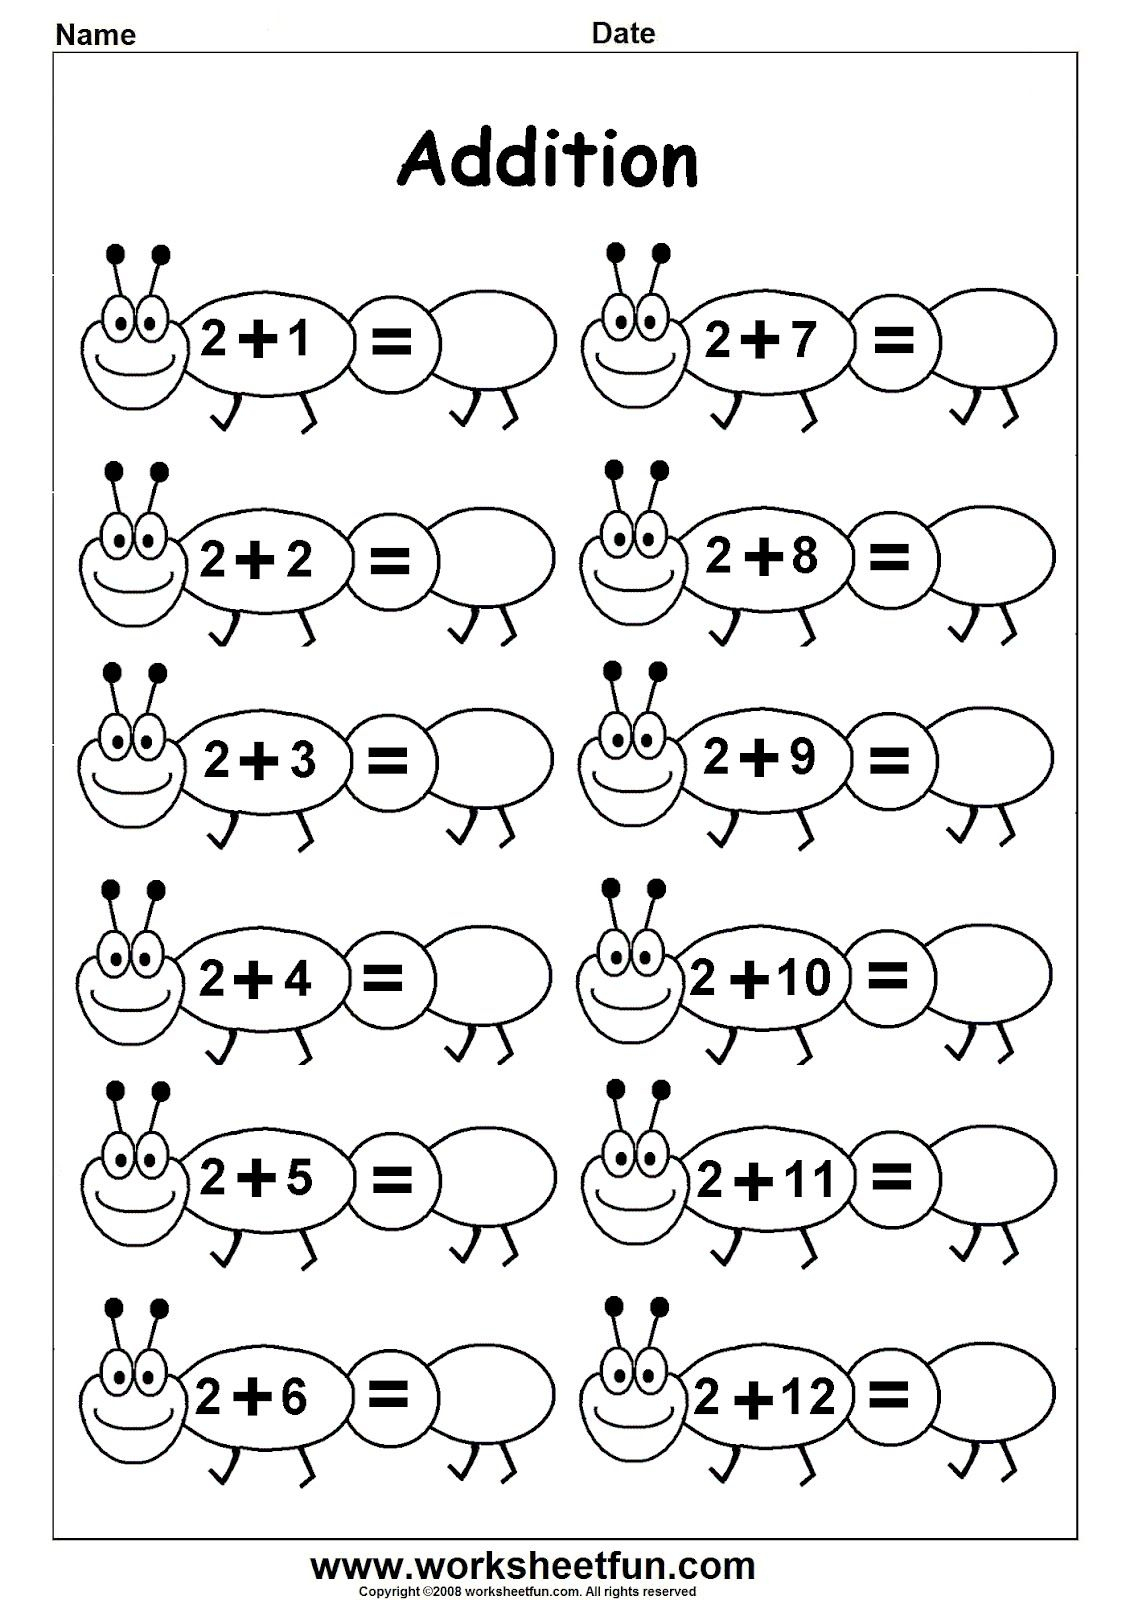 Worksheetfun - Free Printable Worksheets | 1St Grade Math - Free Printable Activities For Kindergarten Math